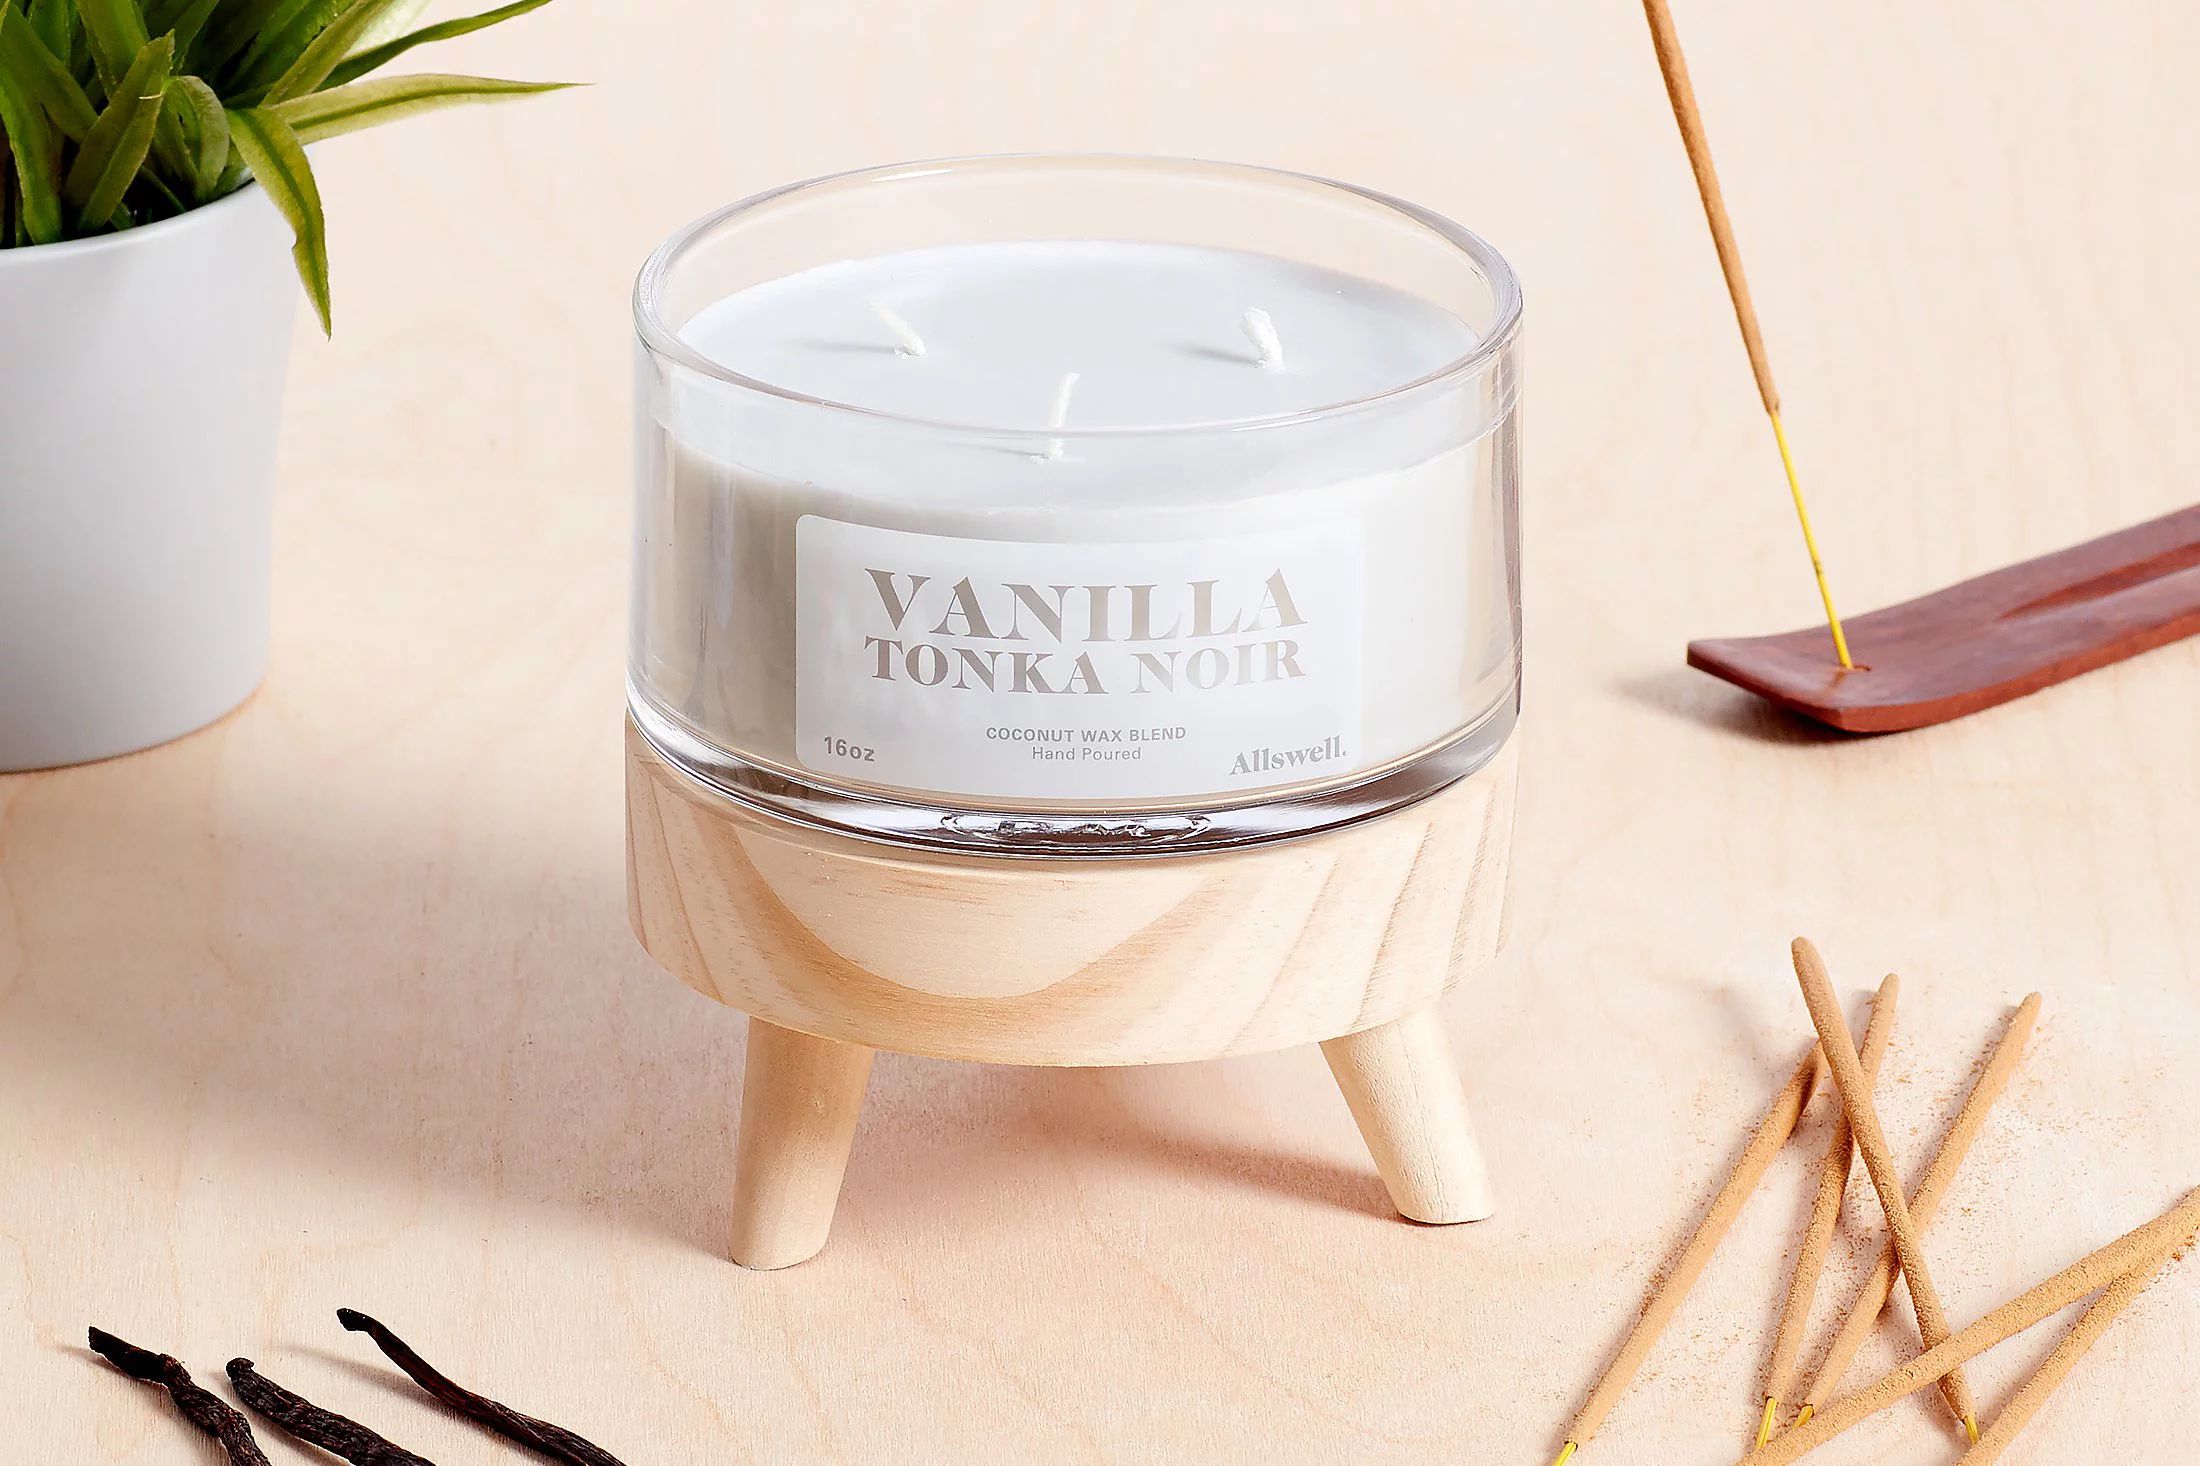 Allswell Vanilla Tonka Noir Coconut Wax Blend Candle, 16 oz. - Walmart.com | Walmart (US)